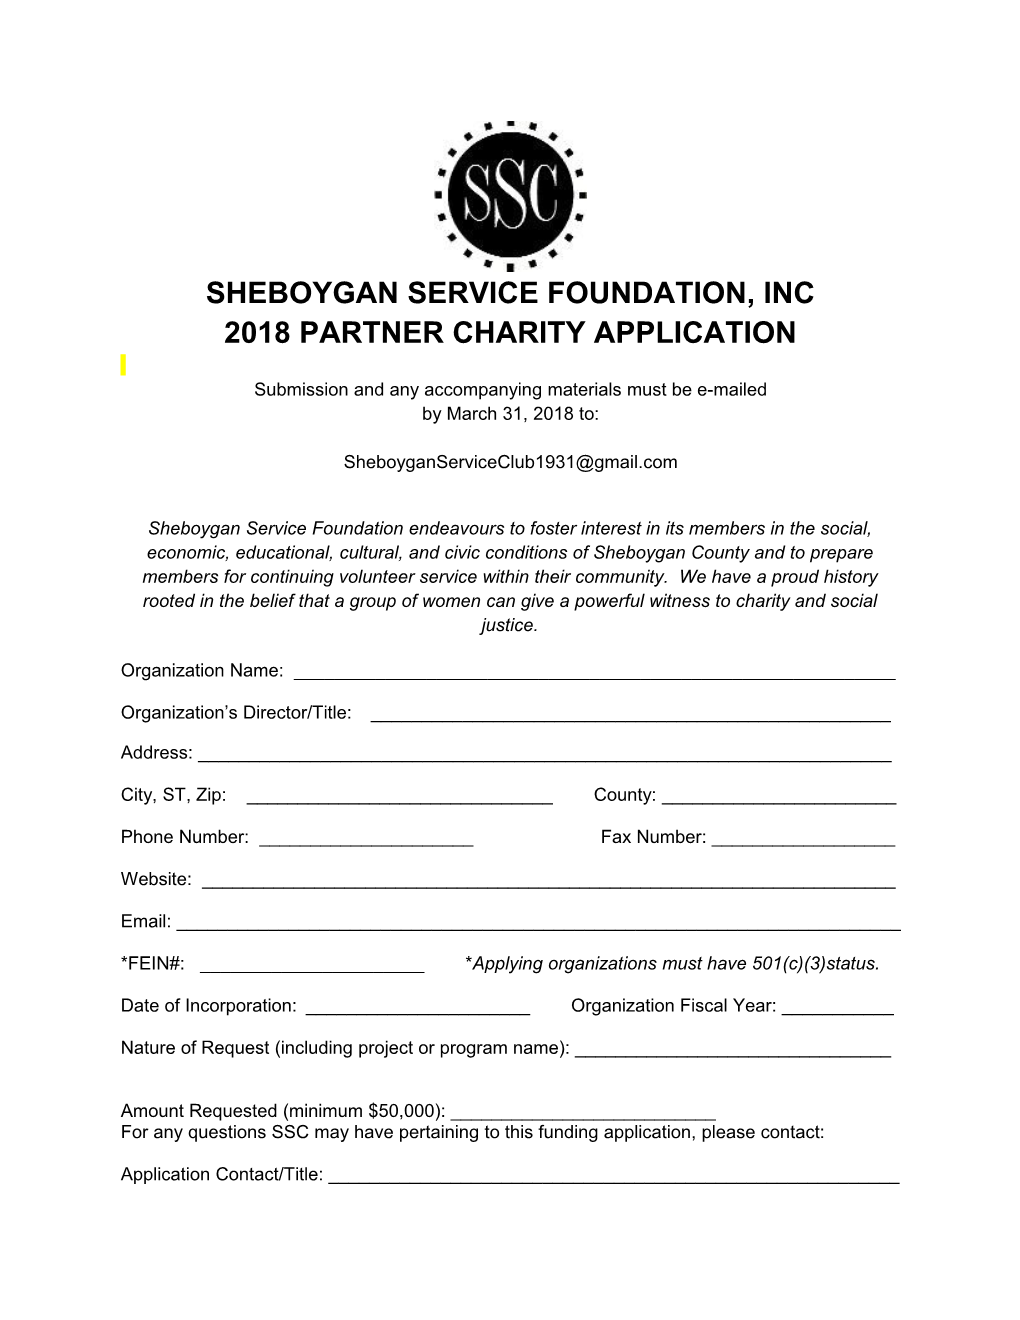 Sheboygan Service Foundation, Inc